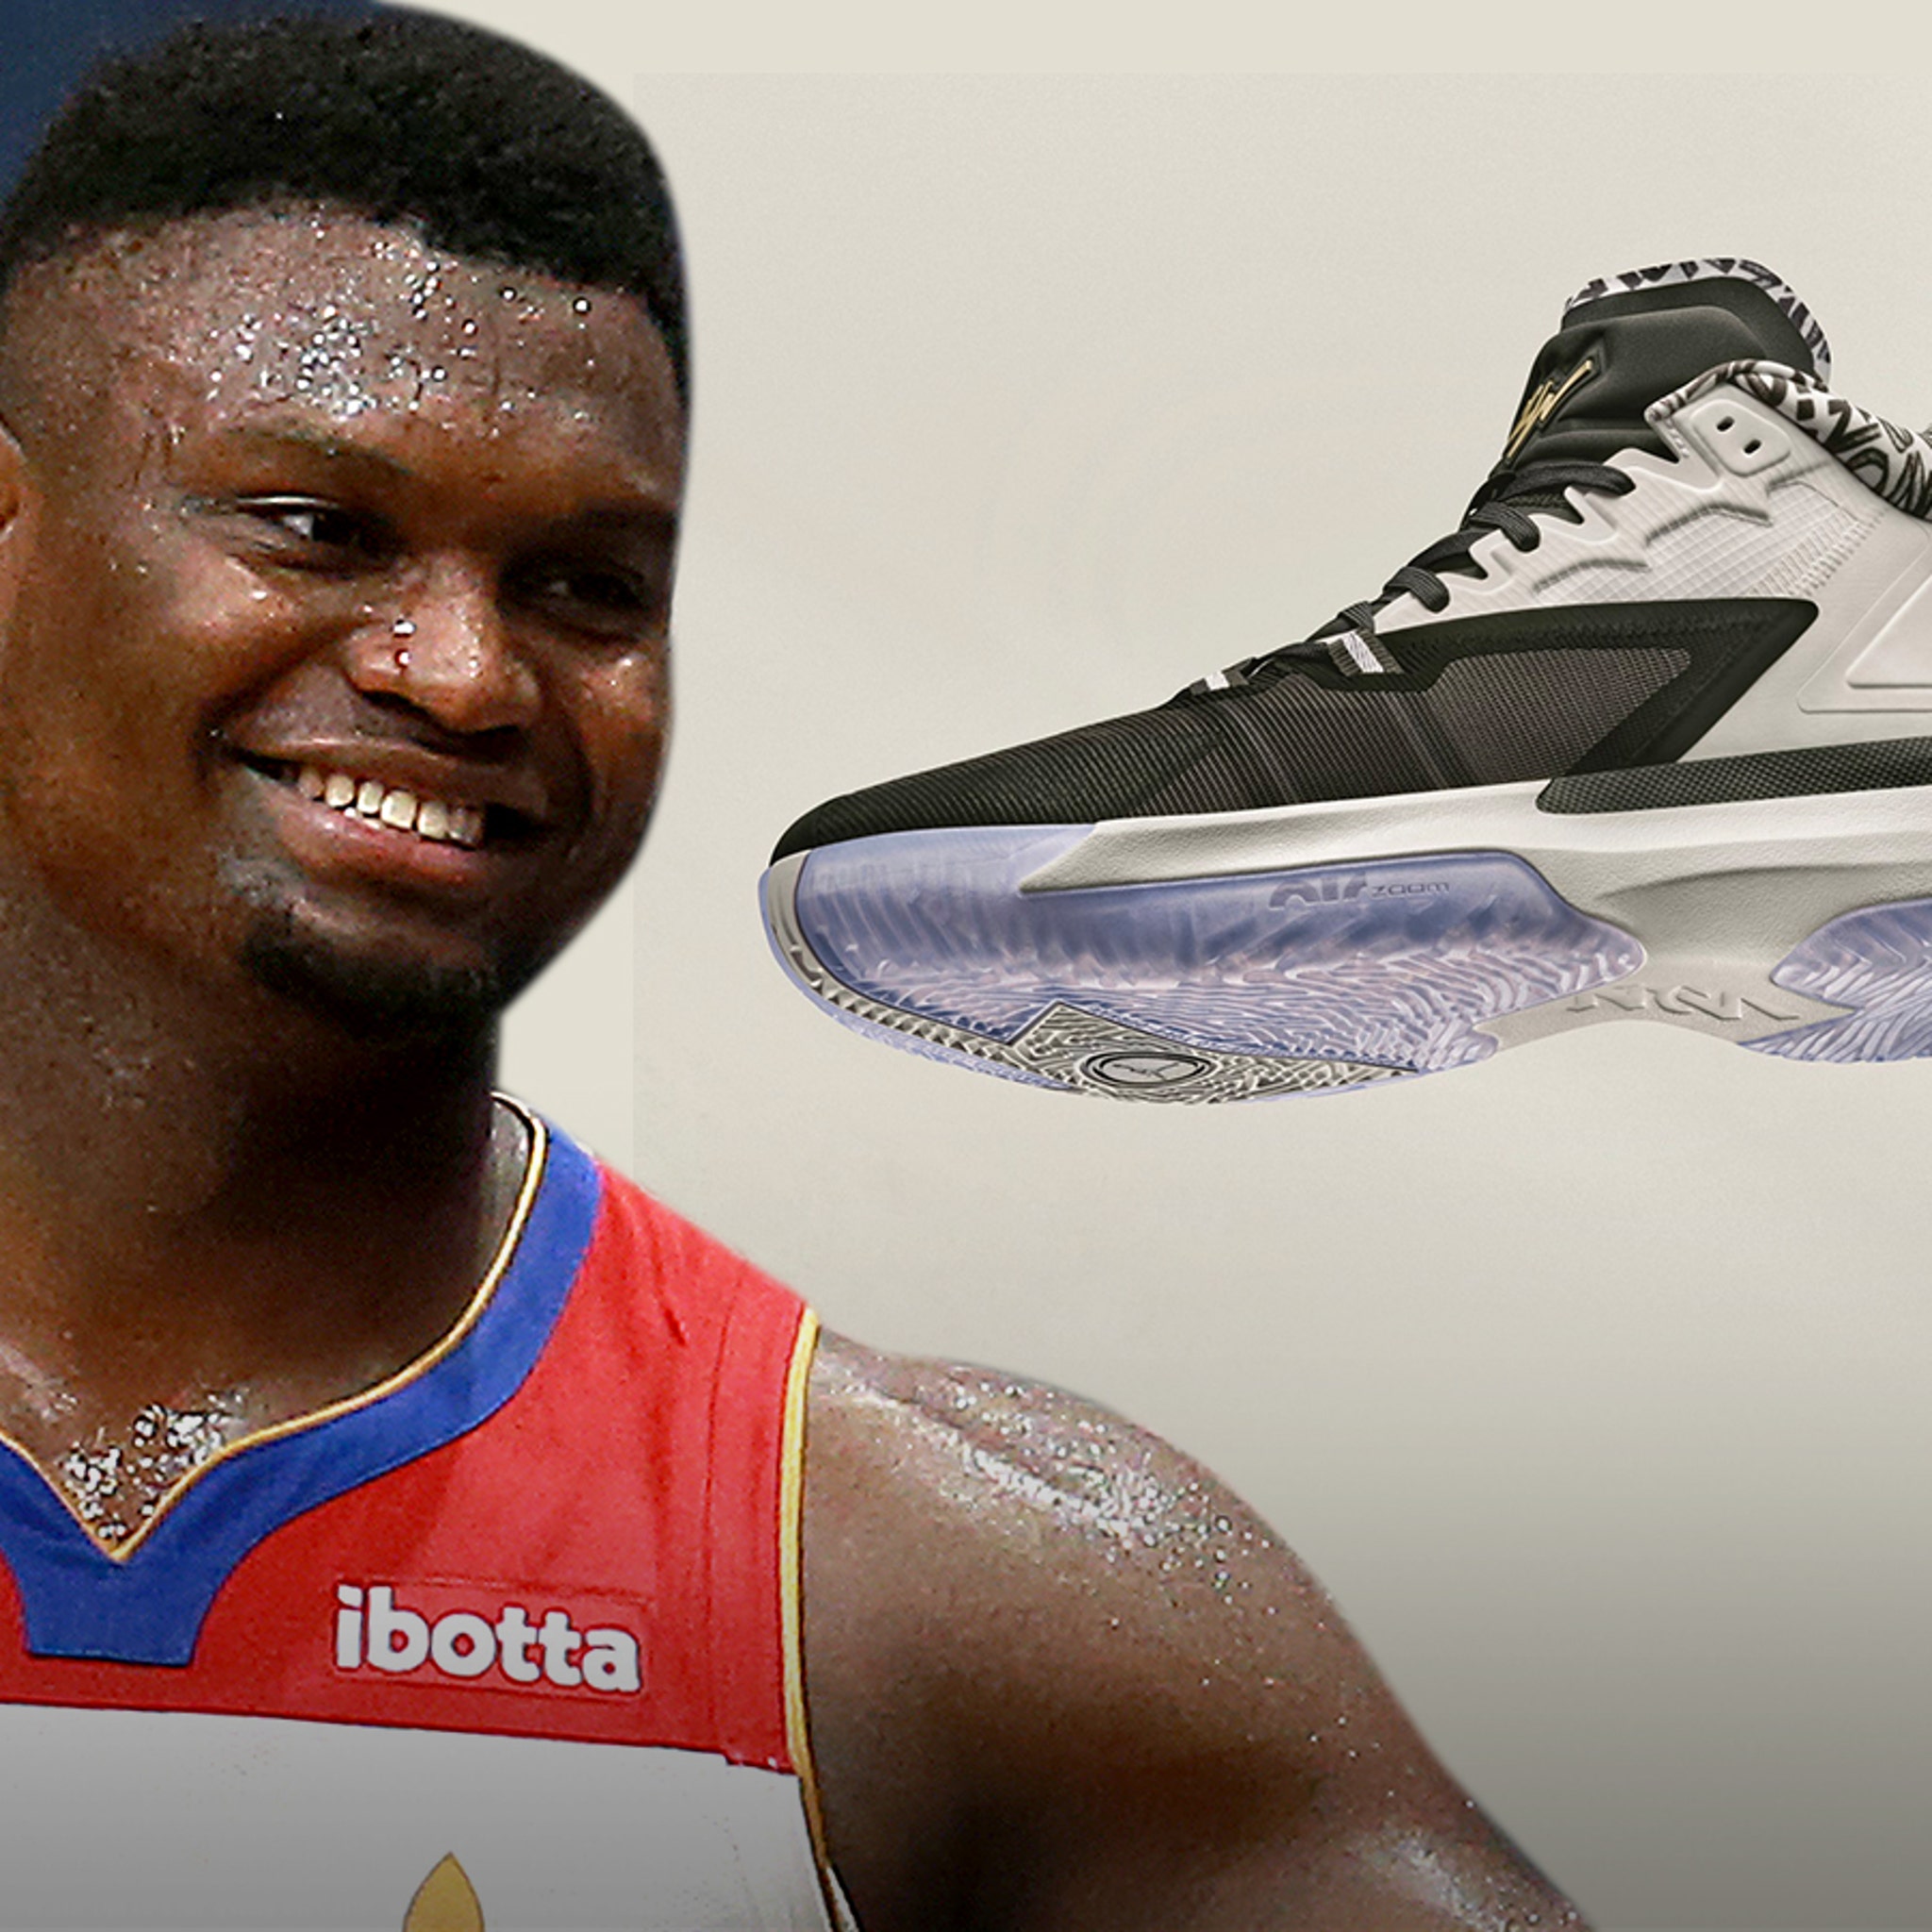 Jordan Brand Reveals NBA Star Jayson Tatum's Debut Signature Shoe